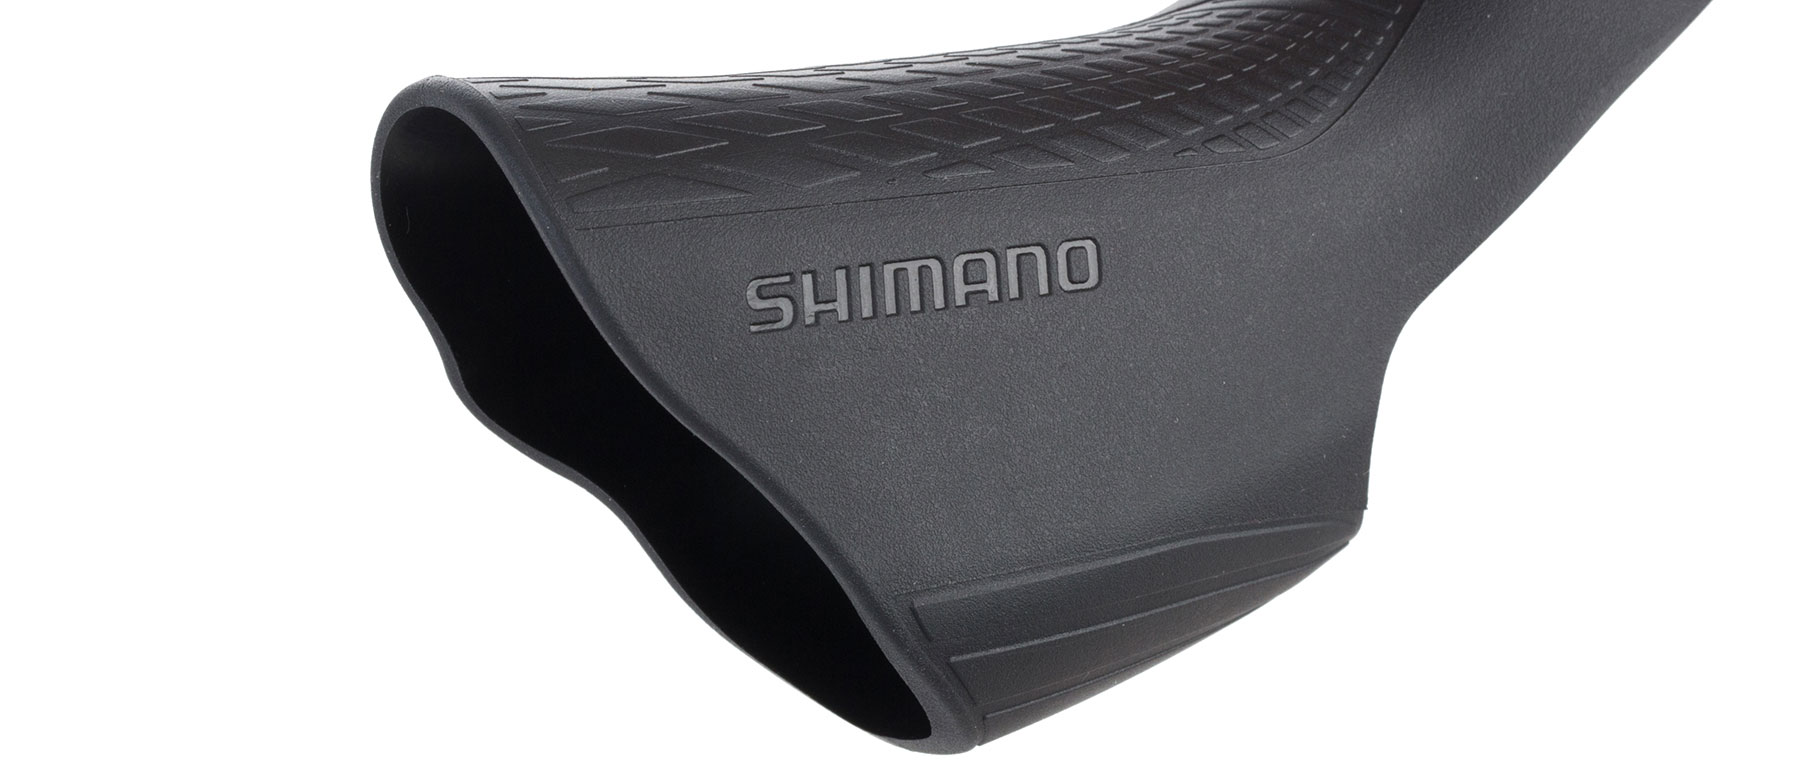 Shimano Ultegra ST-R8000 Dual Control Lever Hoods